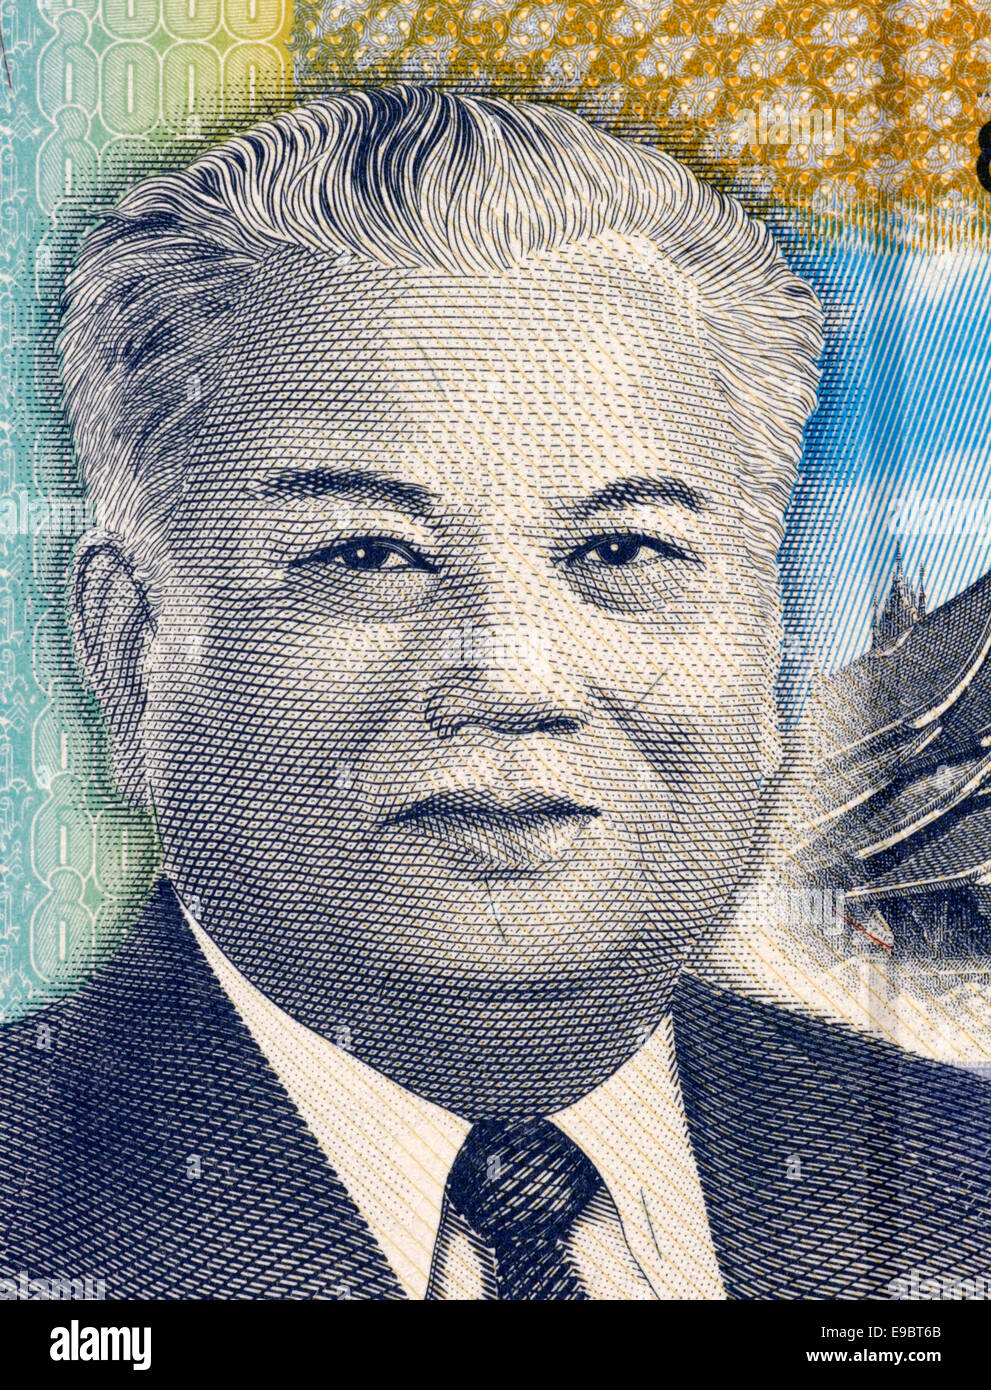 Kaysone Phomvihane (1920-1992) on 2000 Kip 2011 from Laos. Political leader of Laos. Stock Photo